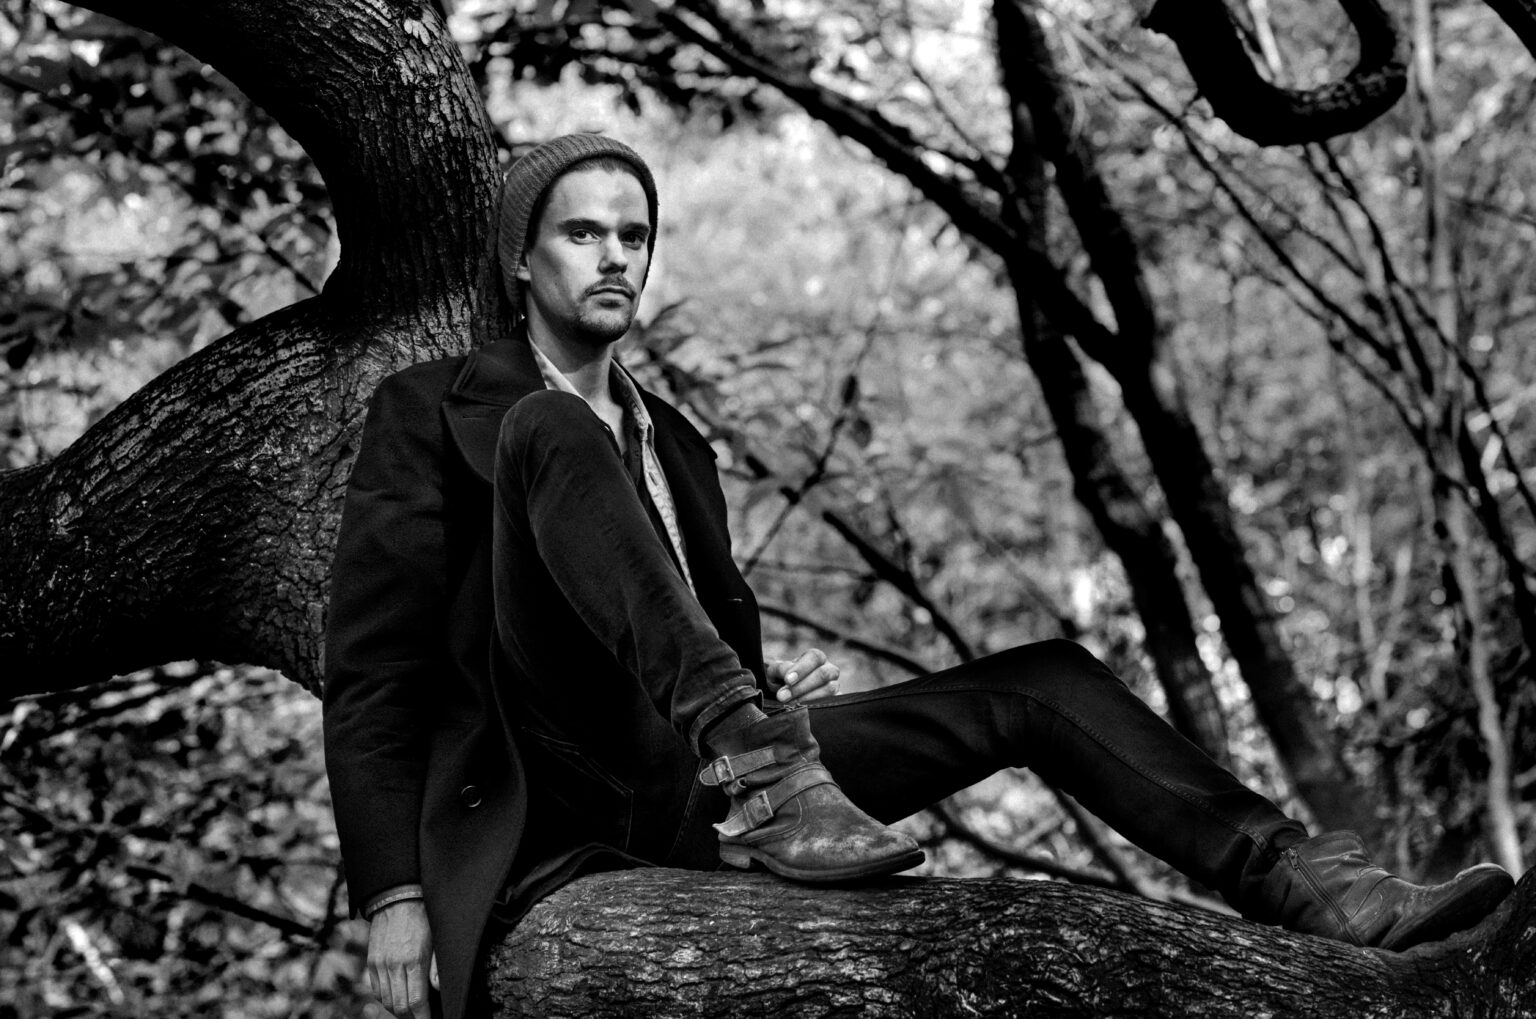 Man zit nadenkend op boomtak in bos, zwart-wit foto.